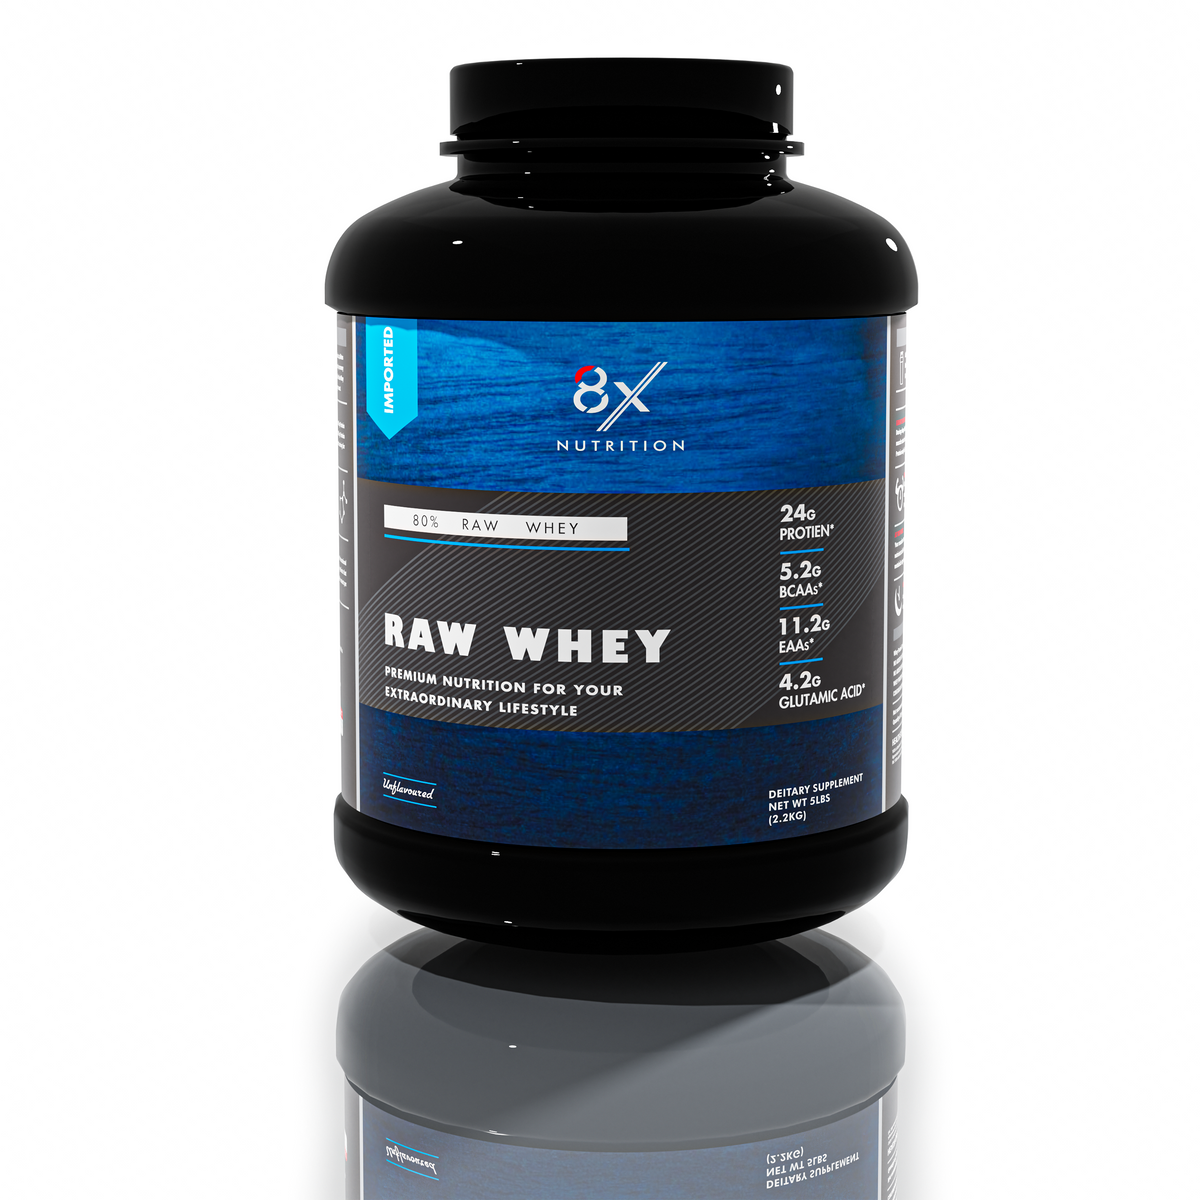 8X Nutrition Raw Whey Protein Supplement Powder (6.6 LBS)